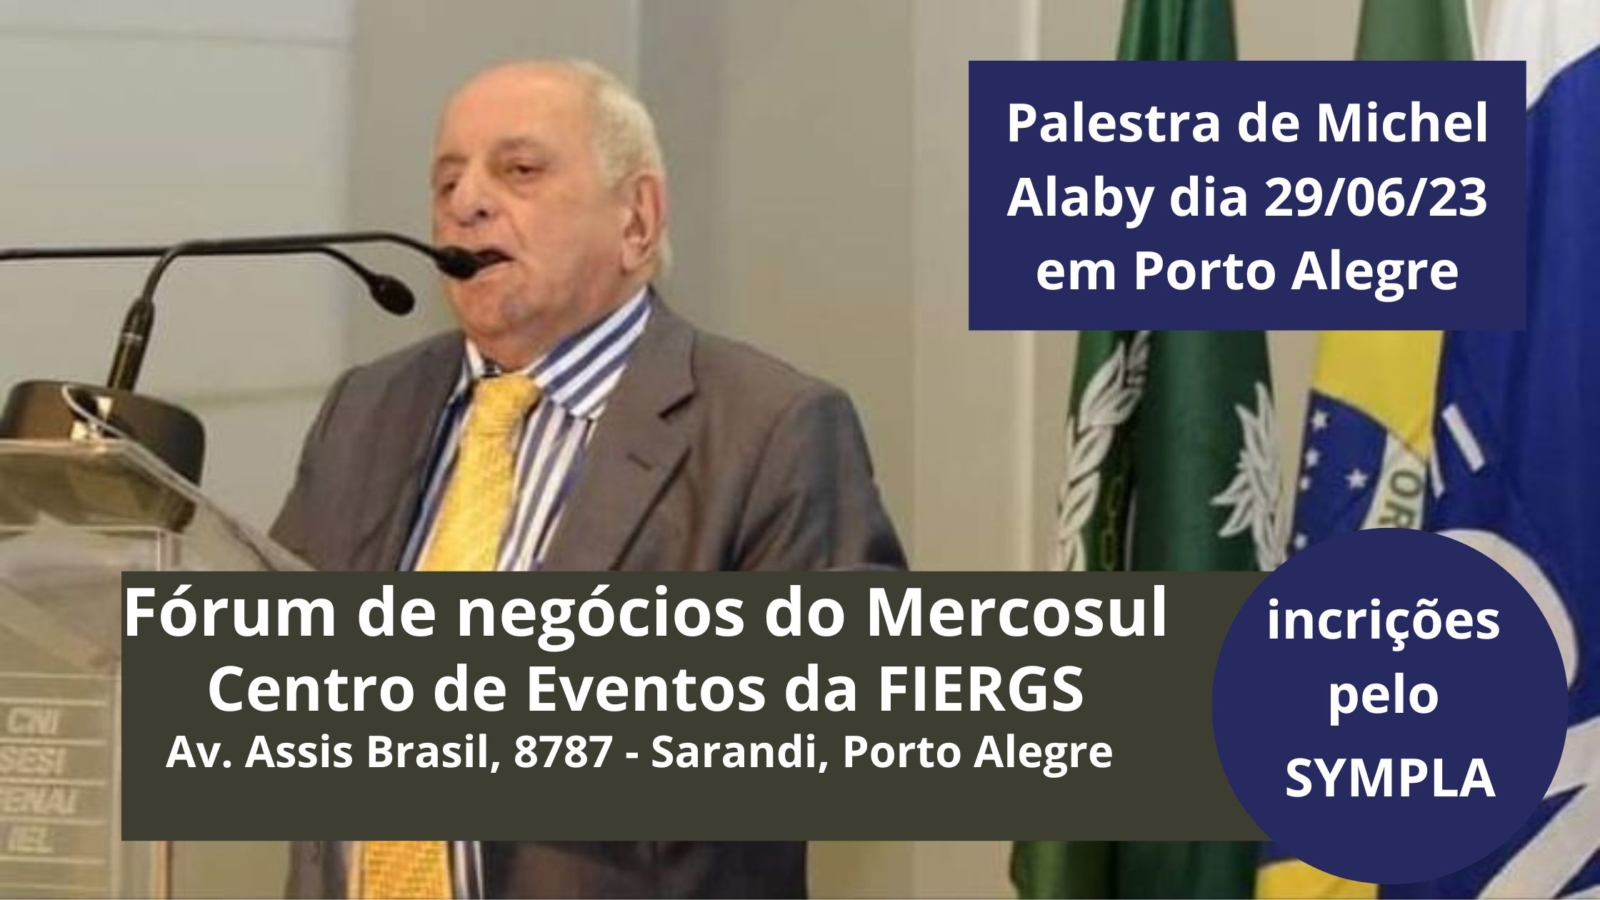 Palestra de Michel Alaby 29 de junho de 2023 - Forum de negócios do Mercosul